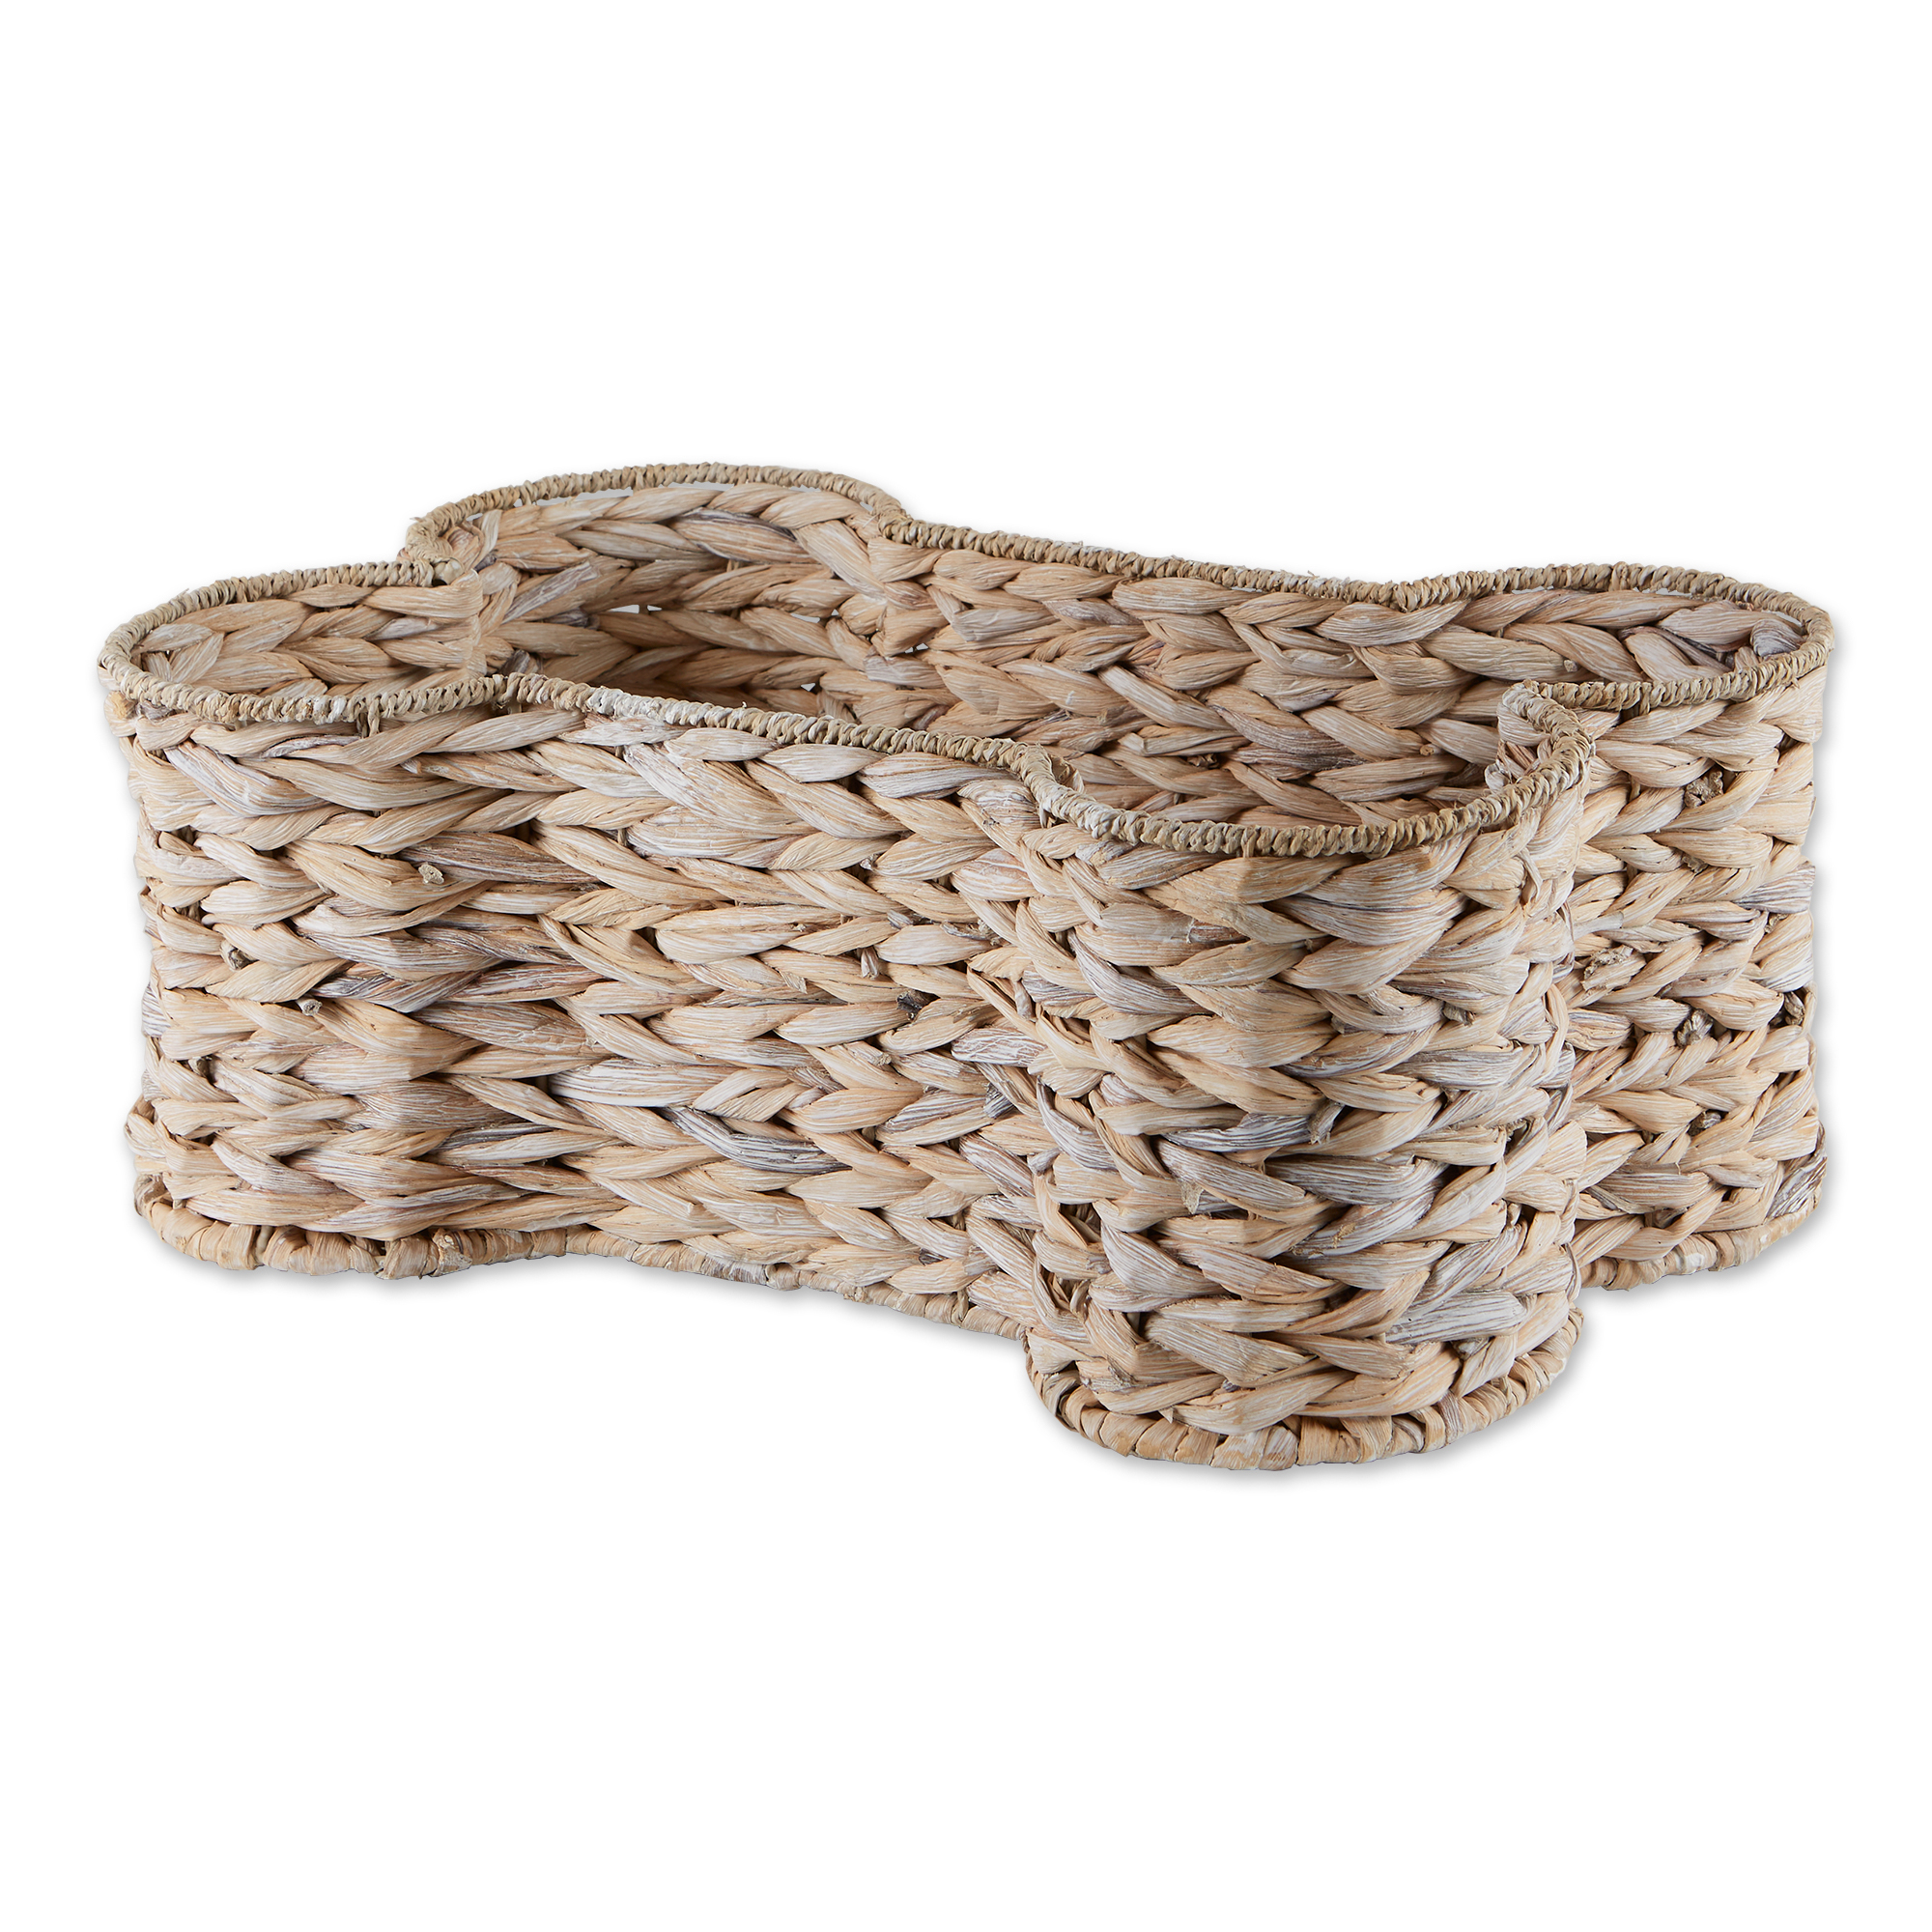 Bone Dry White Wash Hyacinth Bone Pet Basket Small 17.75x11x7.5